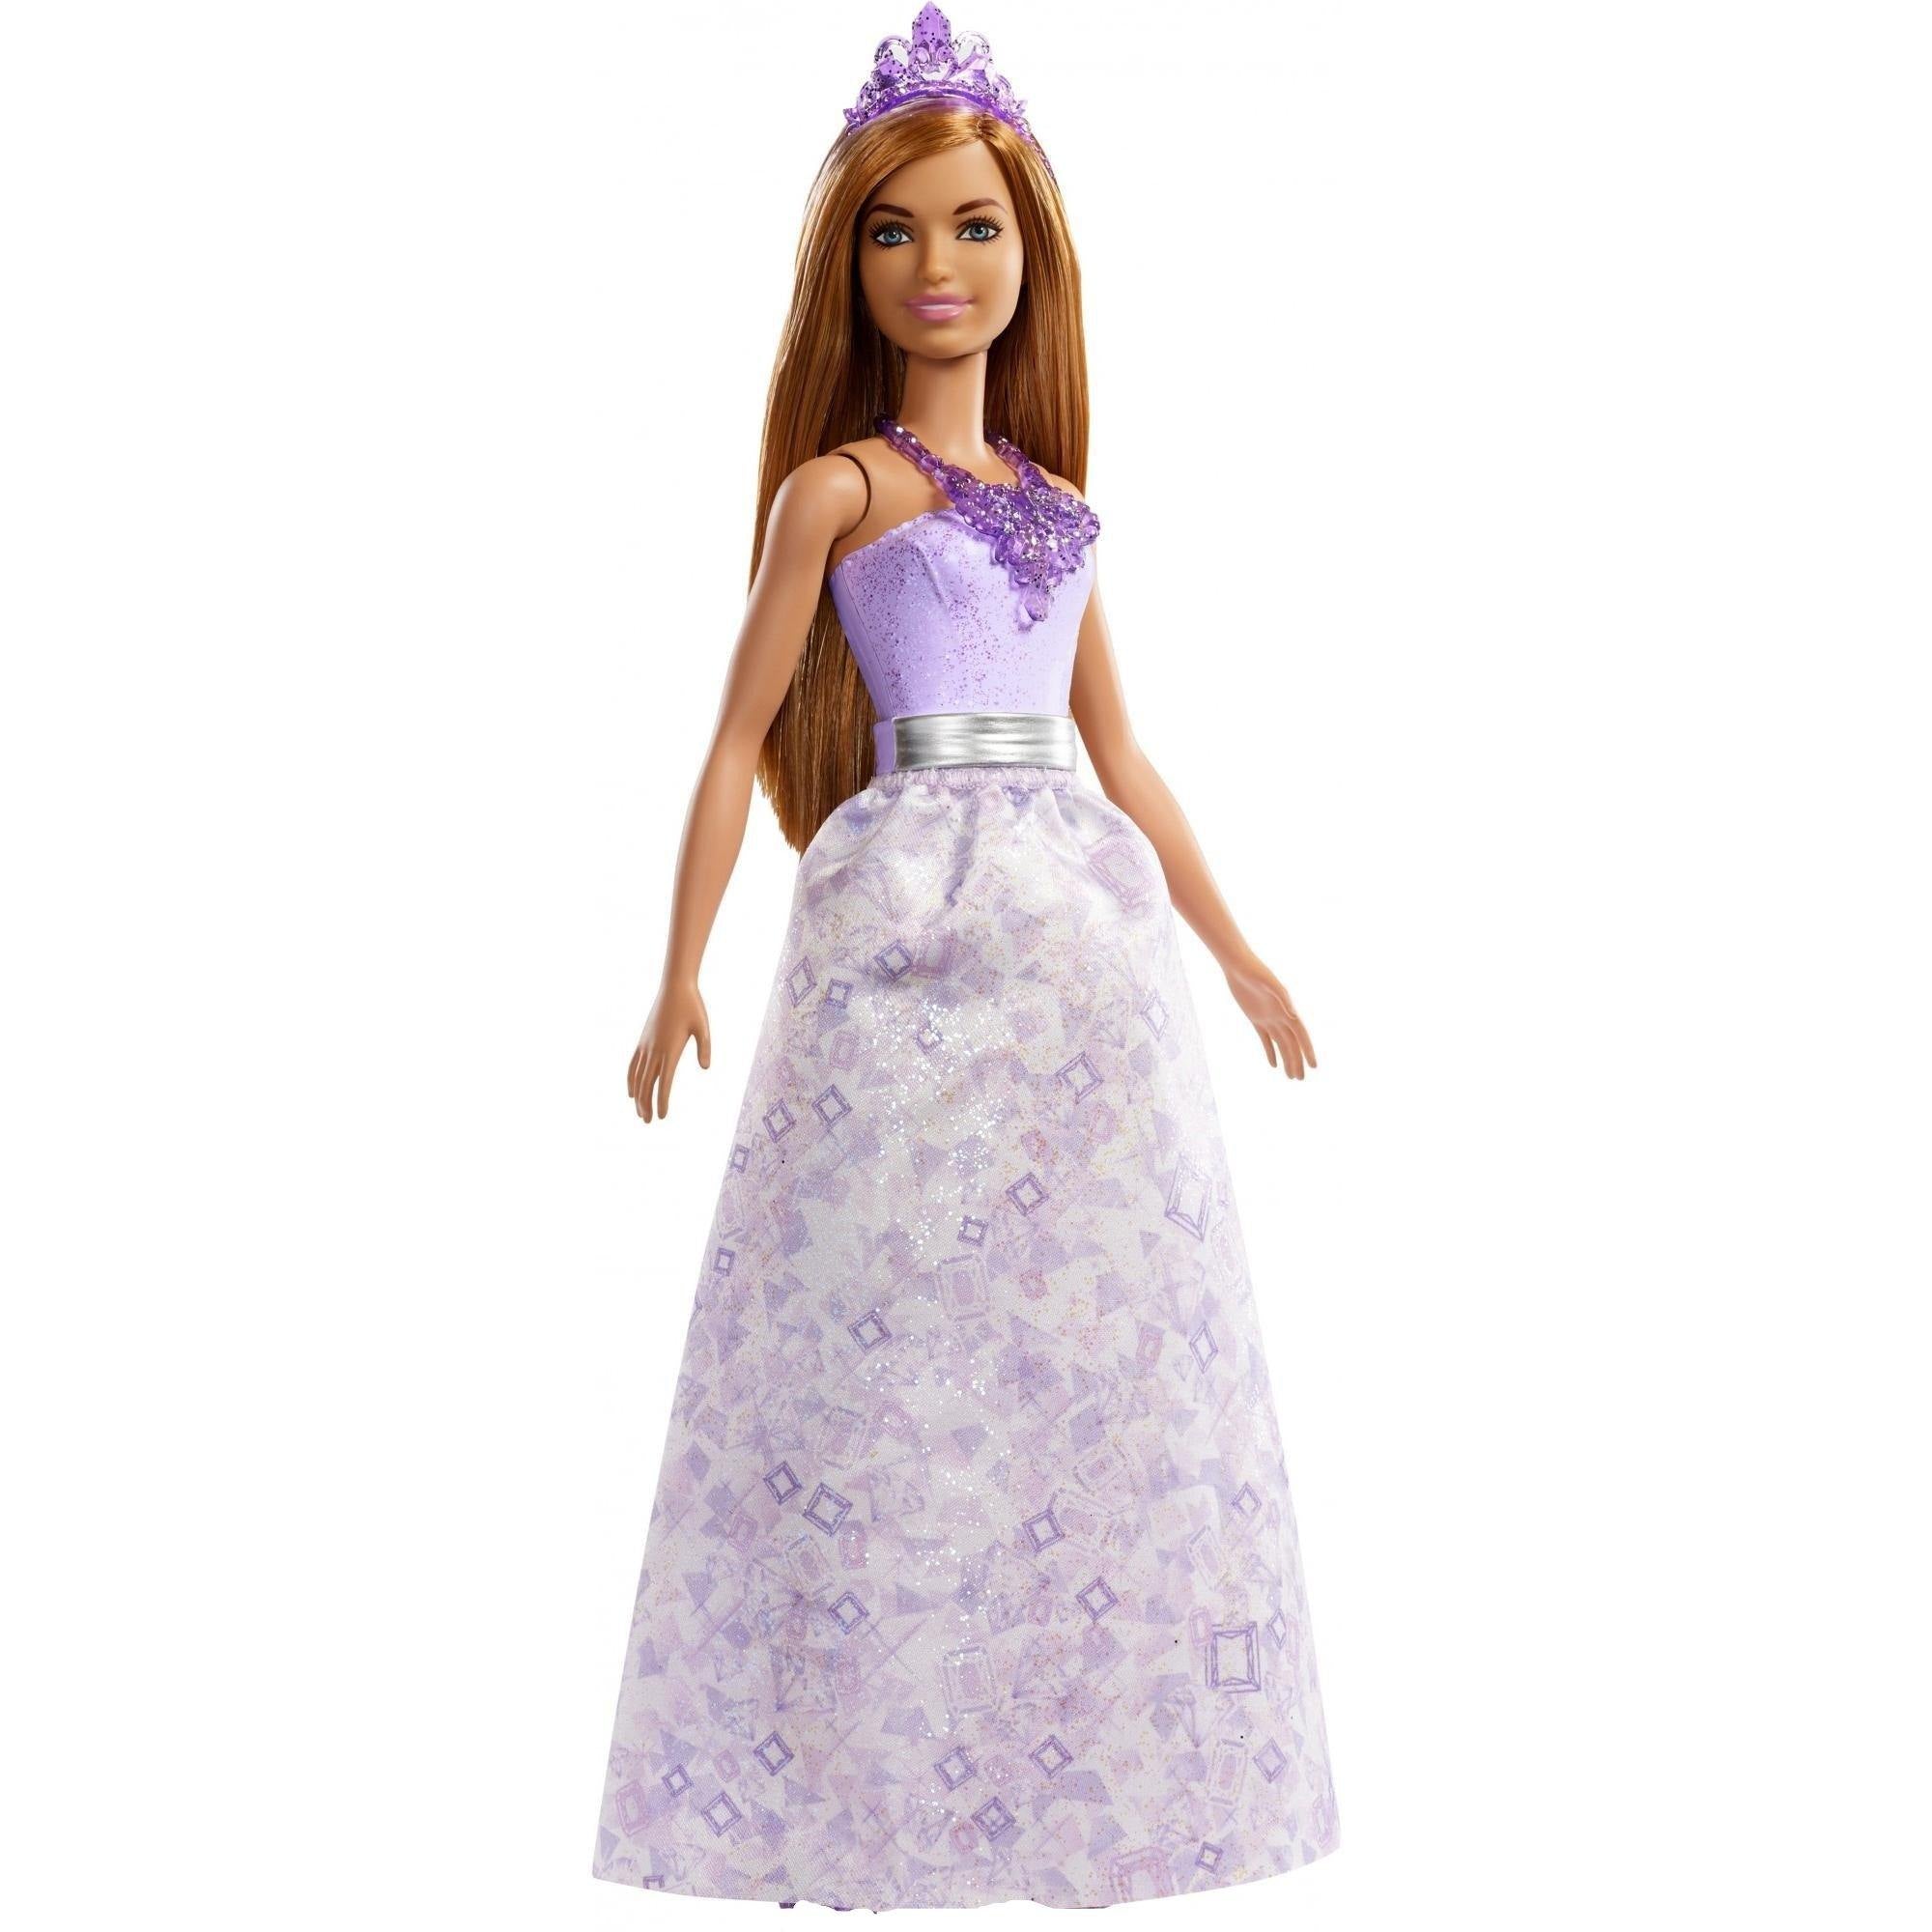 Dreamtopia Barbie Princess (Sold Separately)